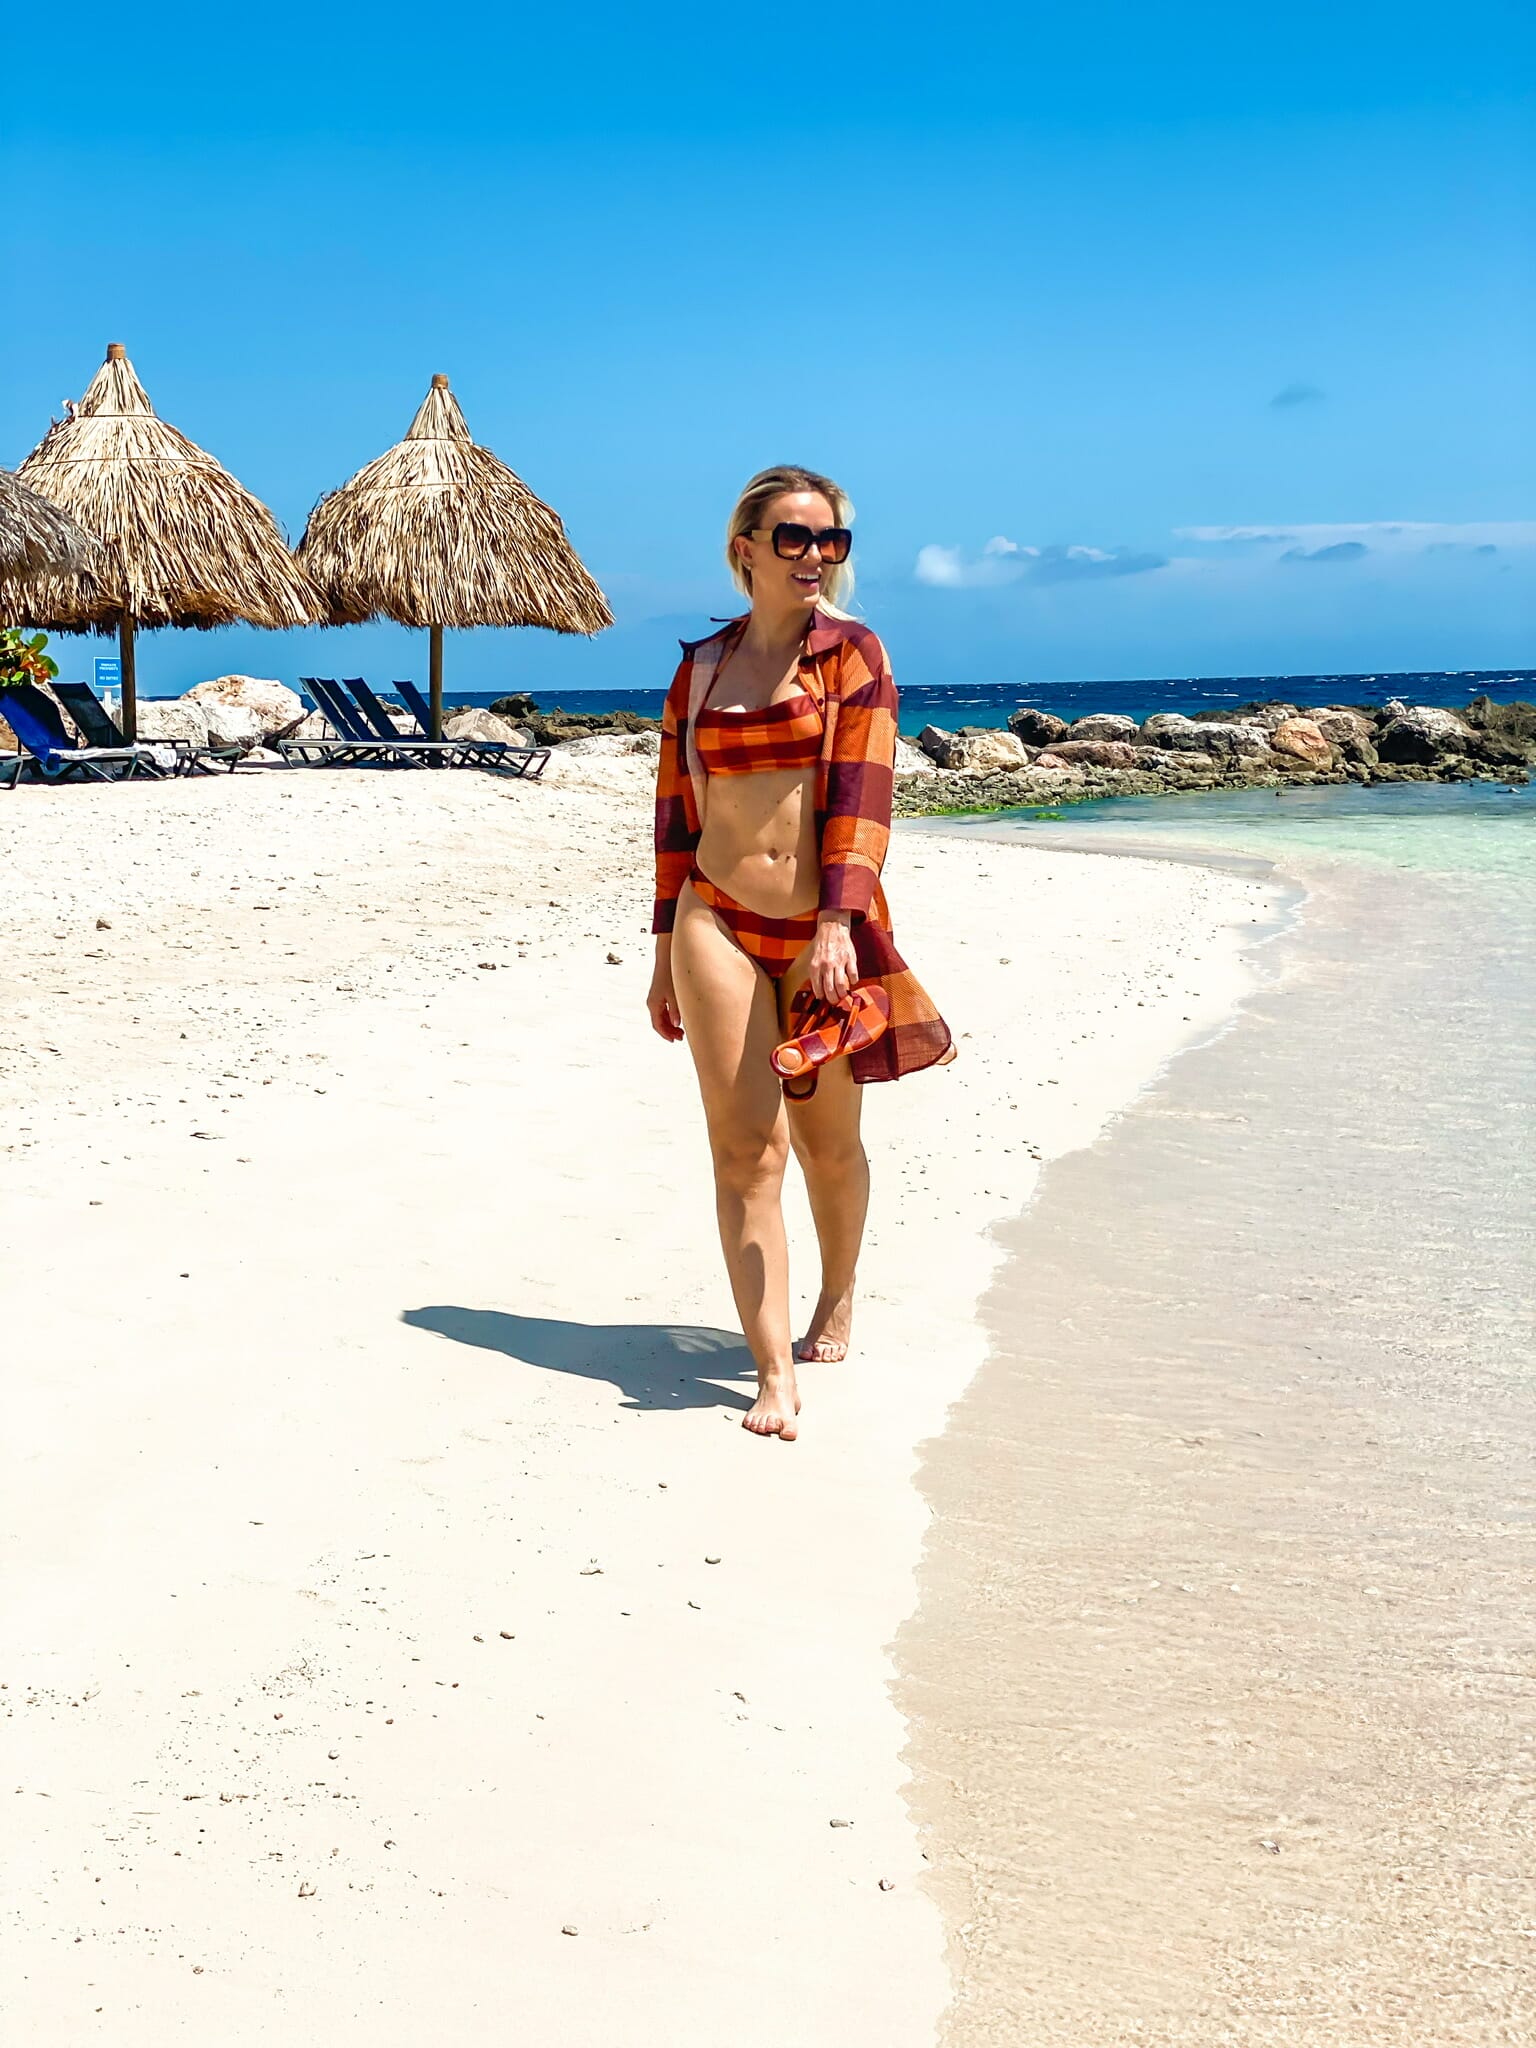 Avila Beach Hotel's Curacao beach - a perfect tropical getaway